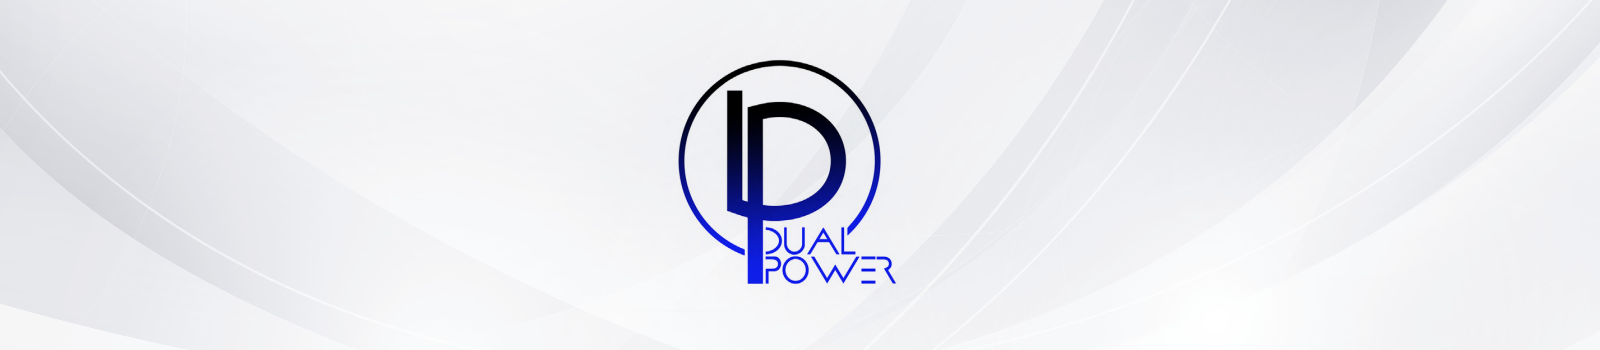 dualpower 1